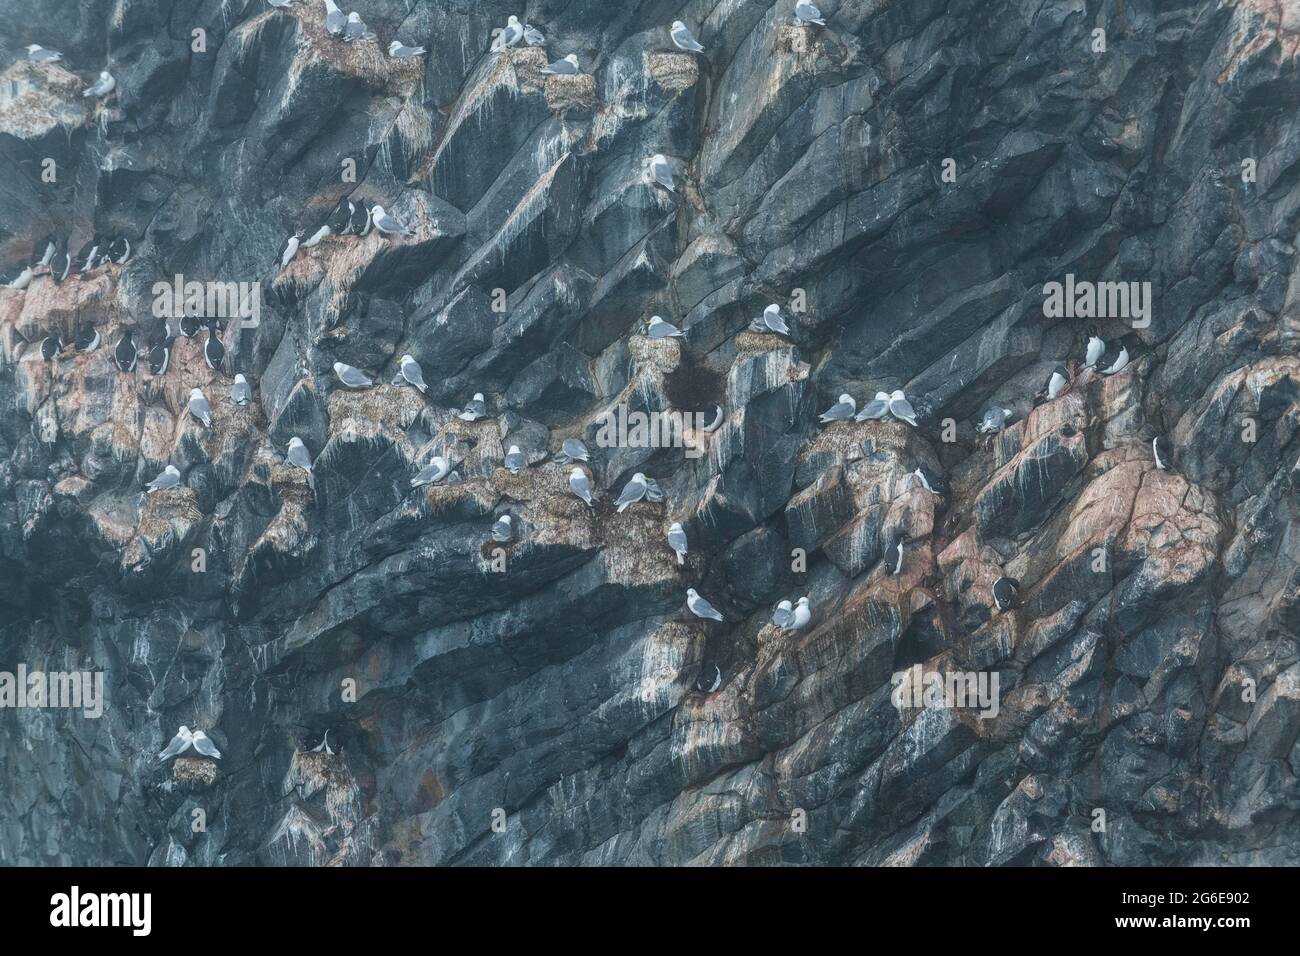 Giant seabird colony on the spectacular rock formation of columnar basalt, Skala Rubini or Rubini rock, Franz Josef Land archipelago, Russia Stock Photo